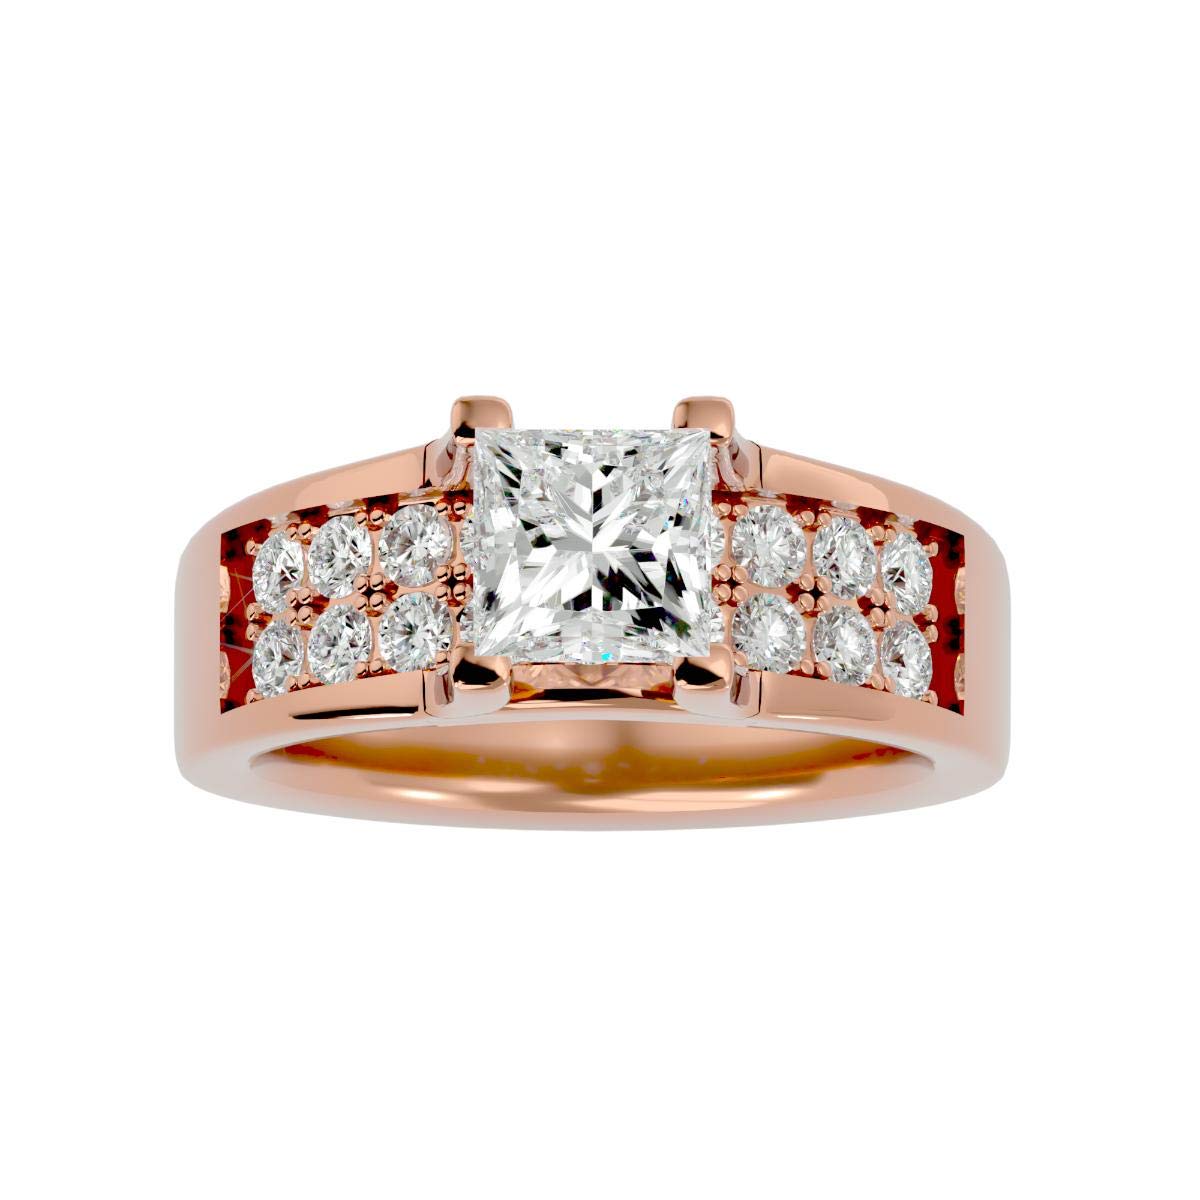 Certified 18K 1 pcs Princess Cut Moissanite Diamond (1.49 Carat) Ring in 4 Prong Setting, 18 pcs Round Cut Natural Diamond (0.72 Carat) With White/Yellow/Rose Gold Engagement Ring For Women, Girl